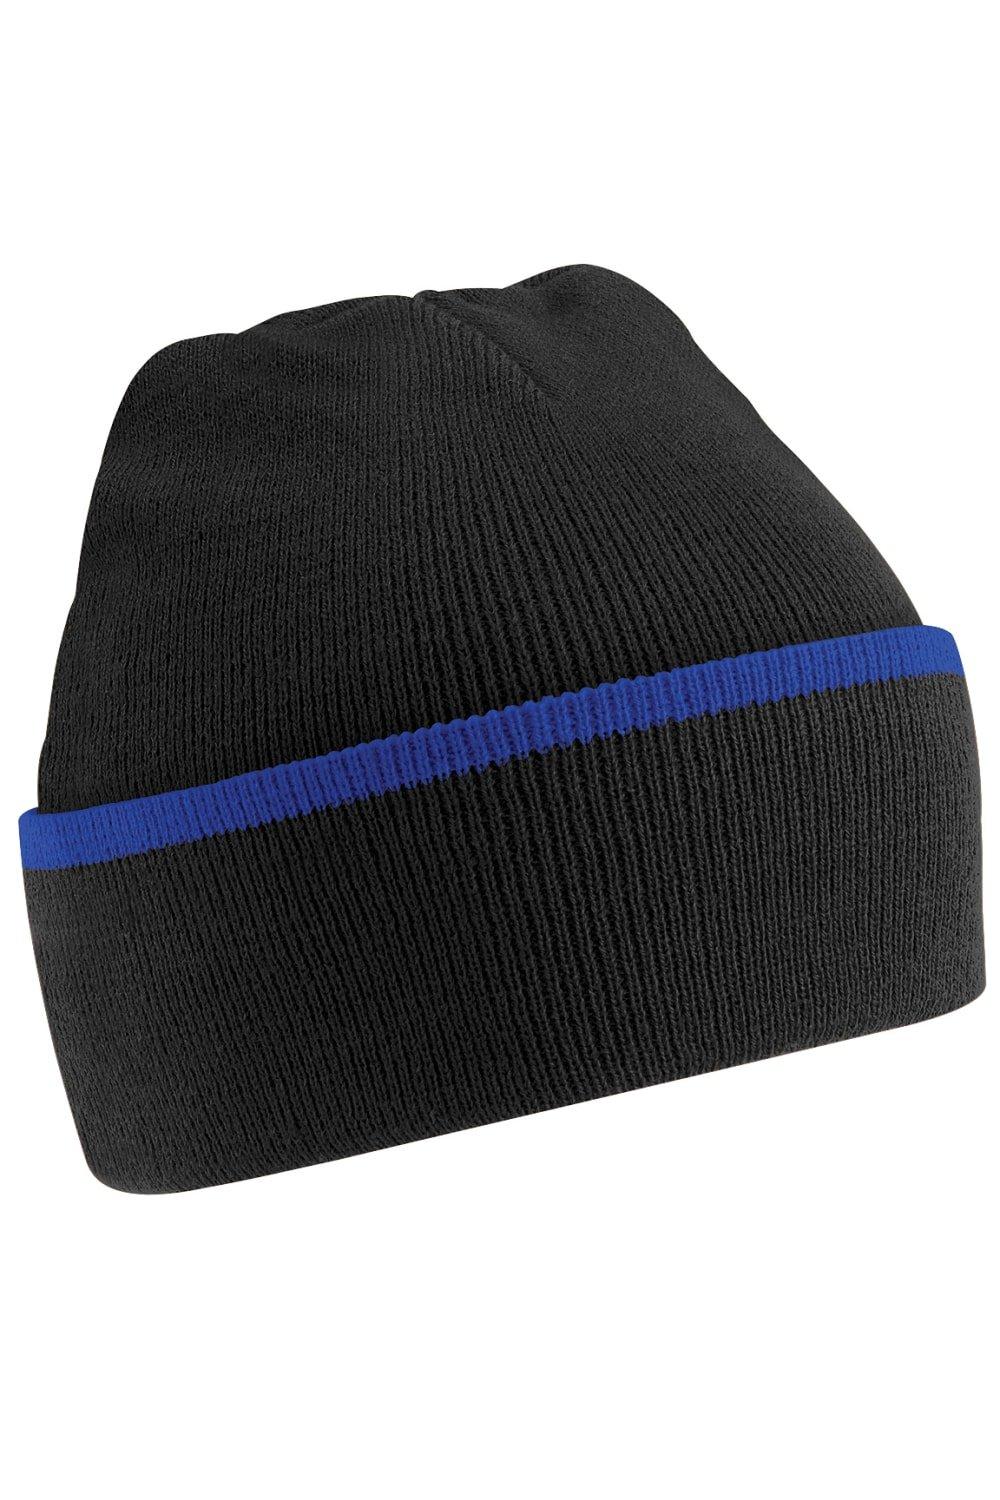 Вязаная зимняя шапка-бини Beechfield, черный шапка балаклава cokk зимняя вязаная шапка шапка маска зимняя шапочка бини